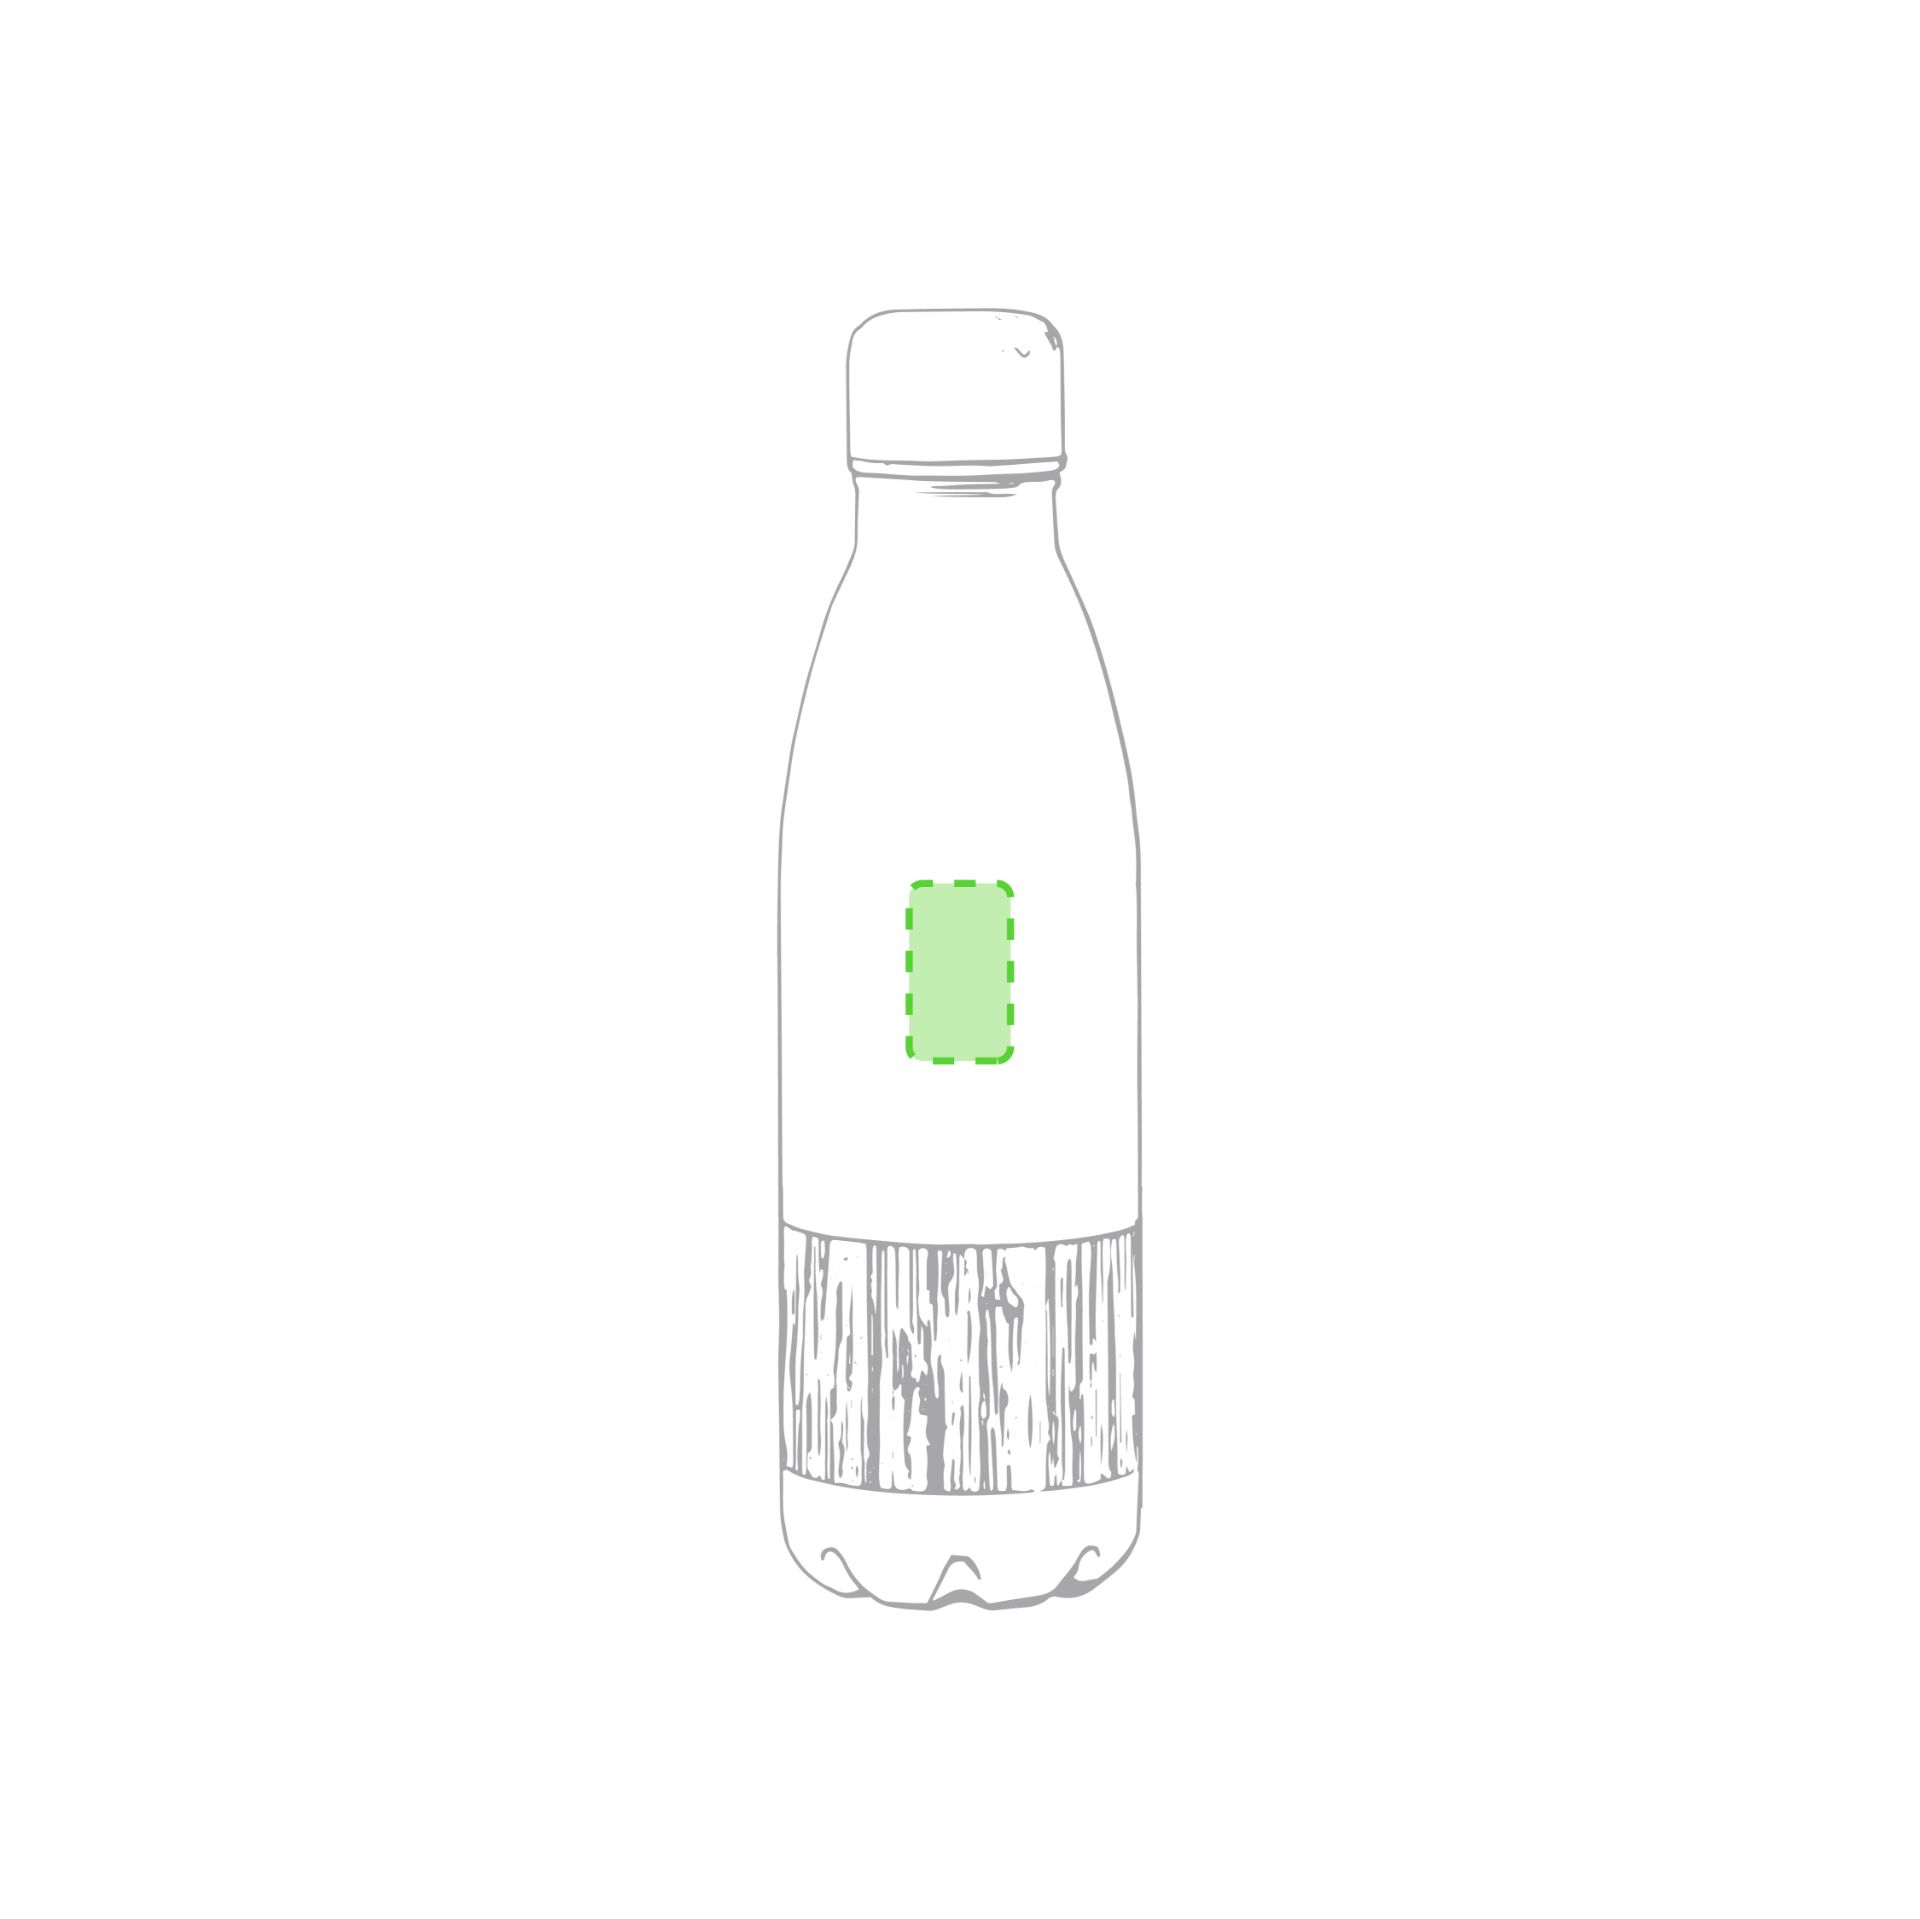 Centered side of the bottle (2 x 3,5 cm)